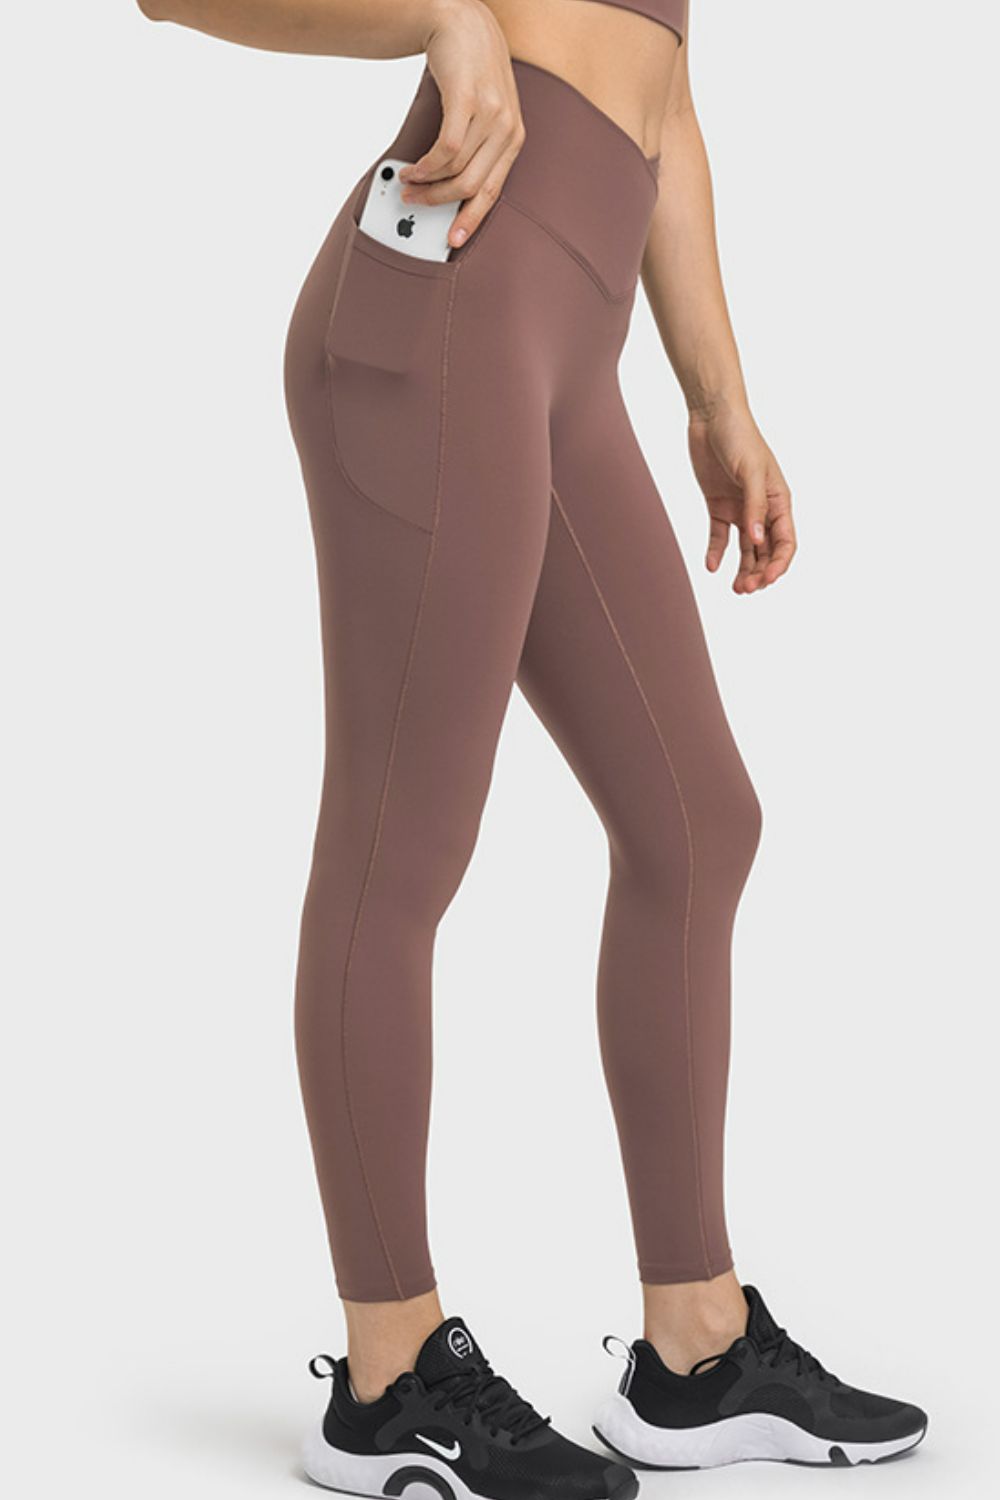 V-Waist Yoga Leggings with Pockets - DromedarShop.com Online Boutique